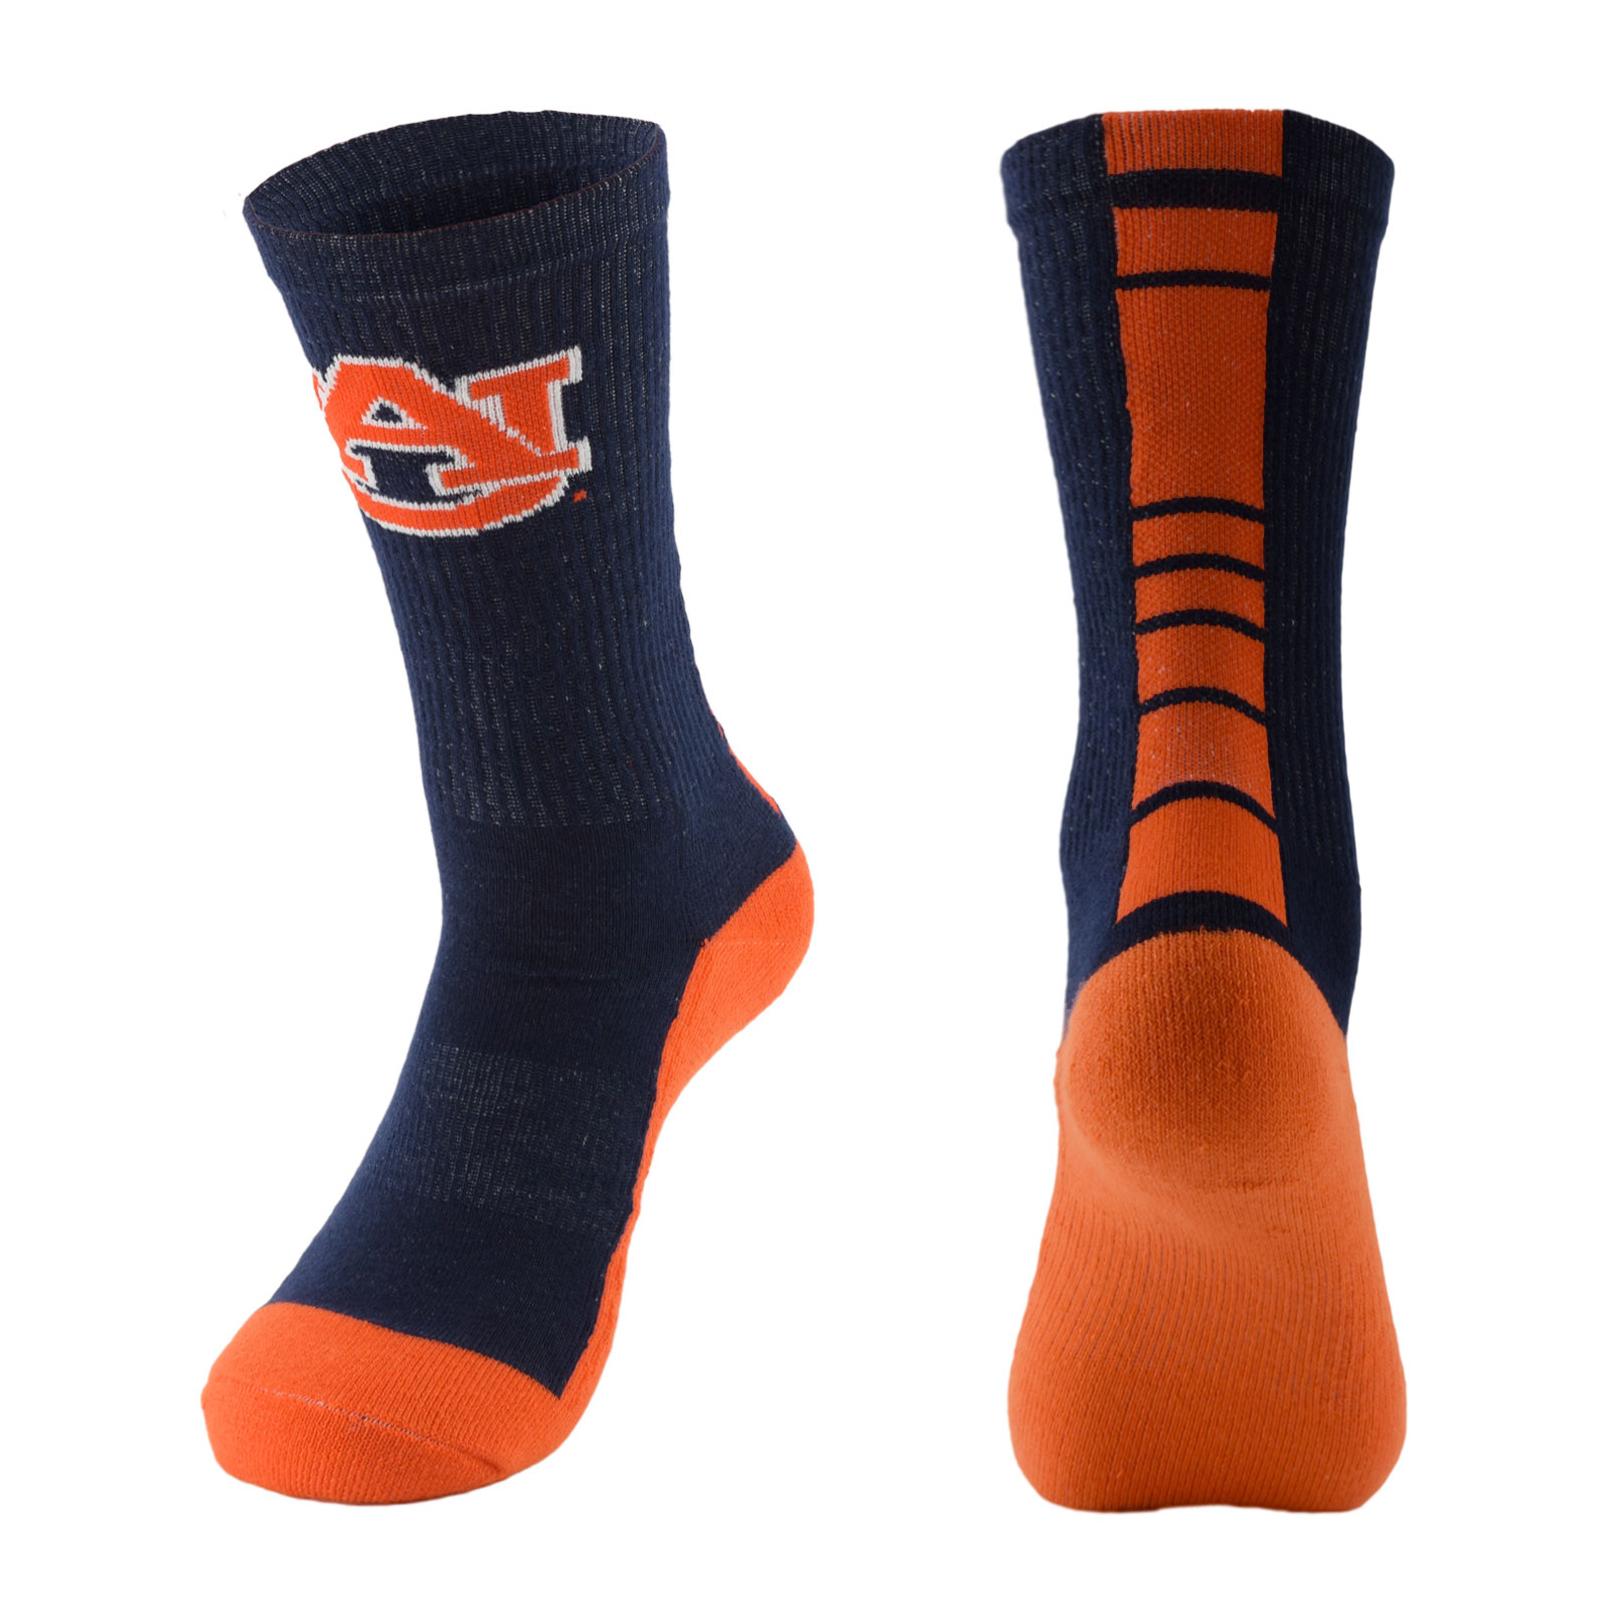 NCAA Men's Performance Crew Socks - Auburn Tigers